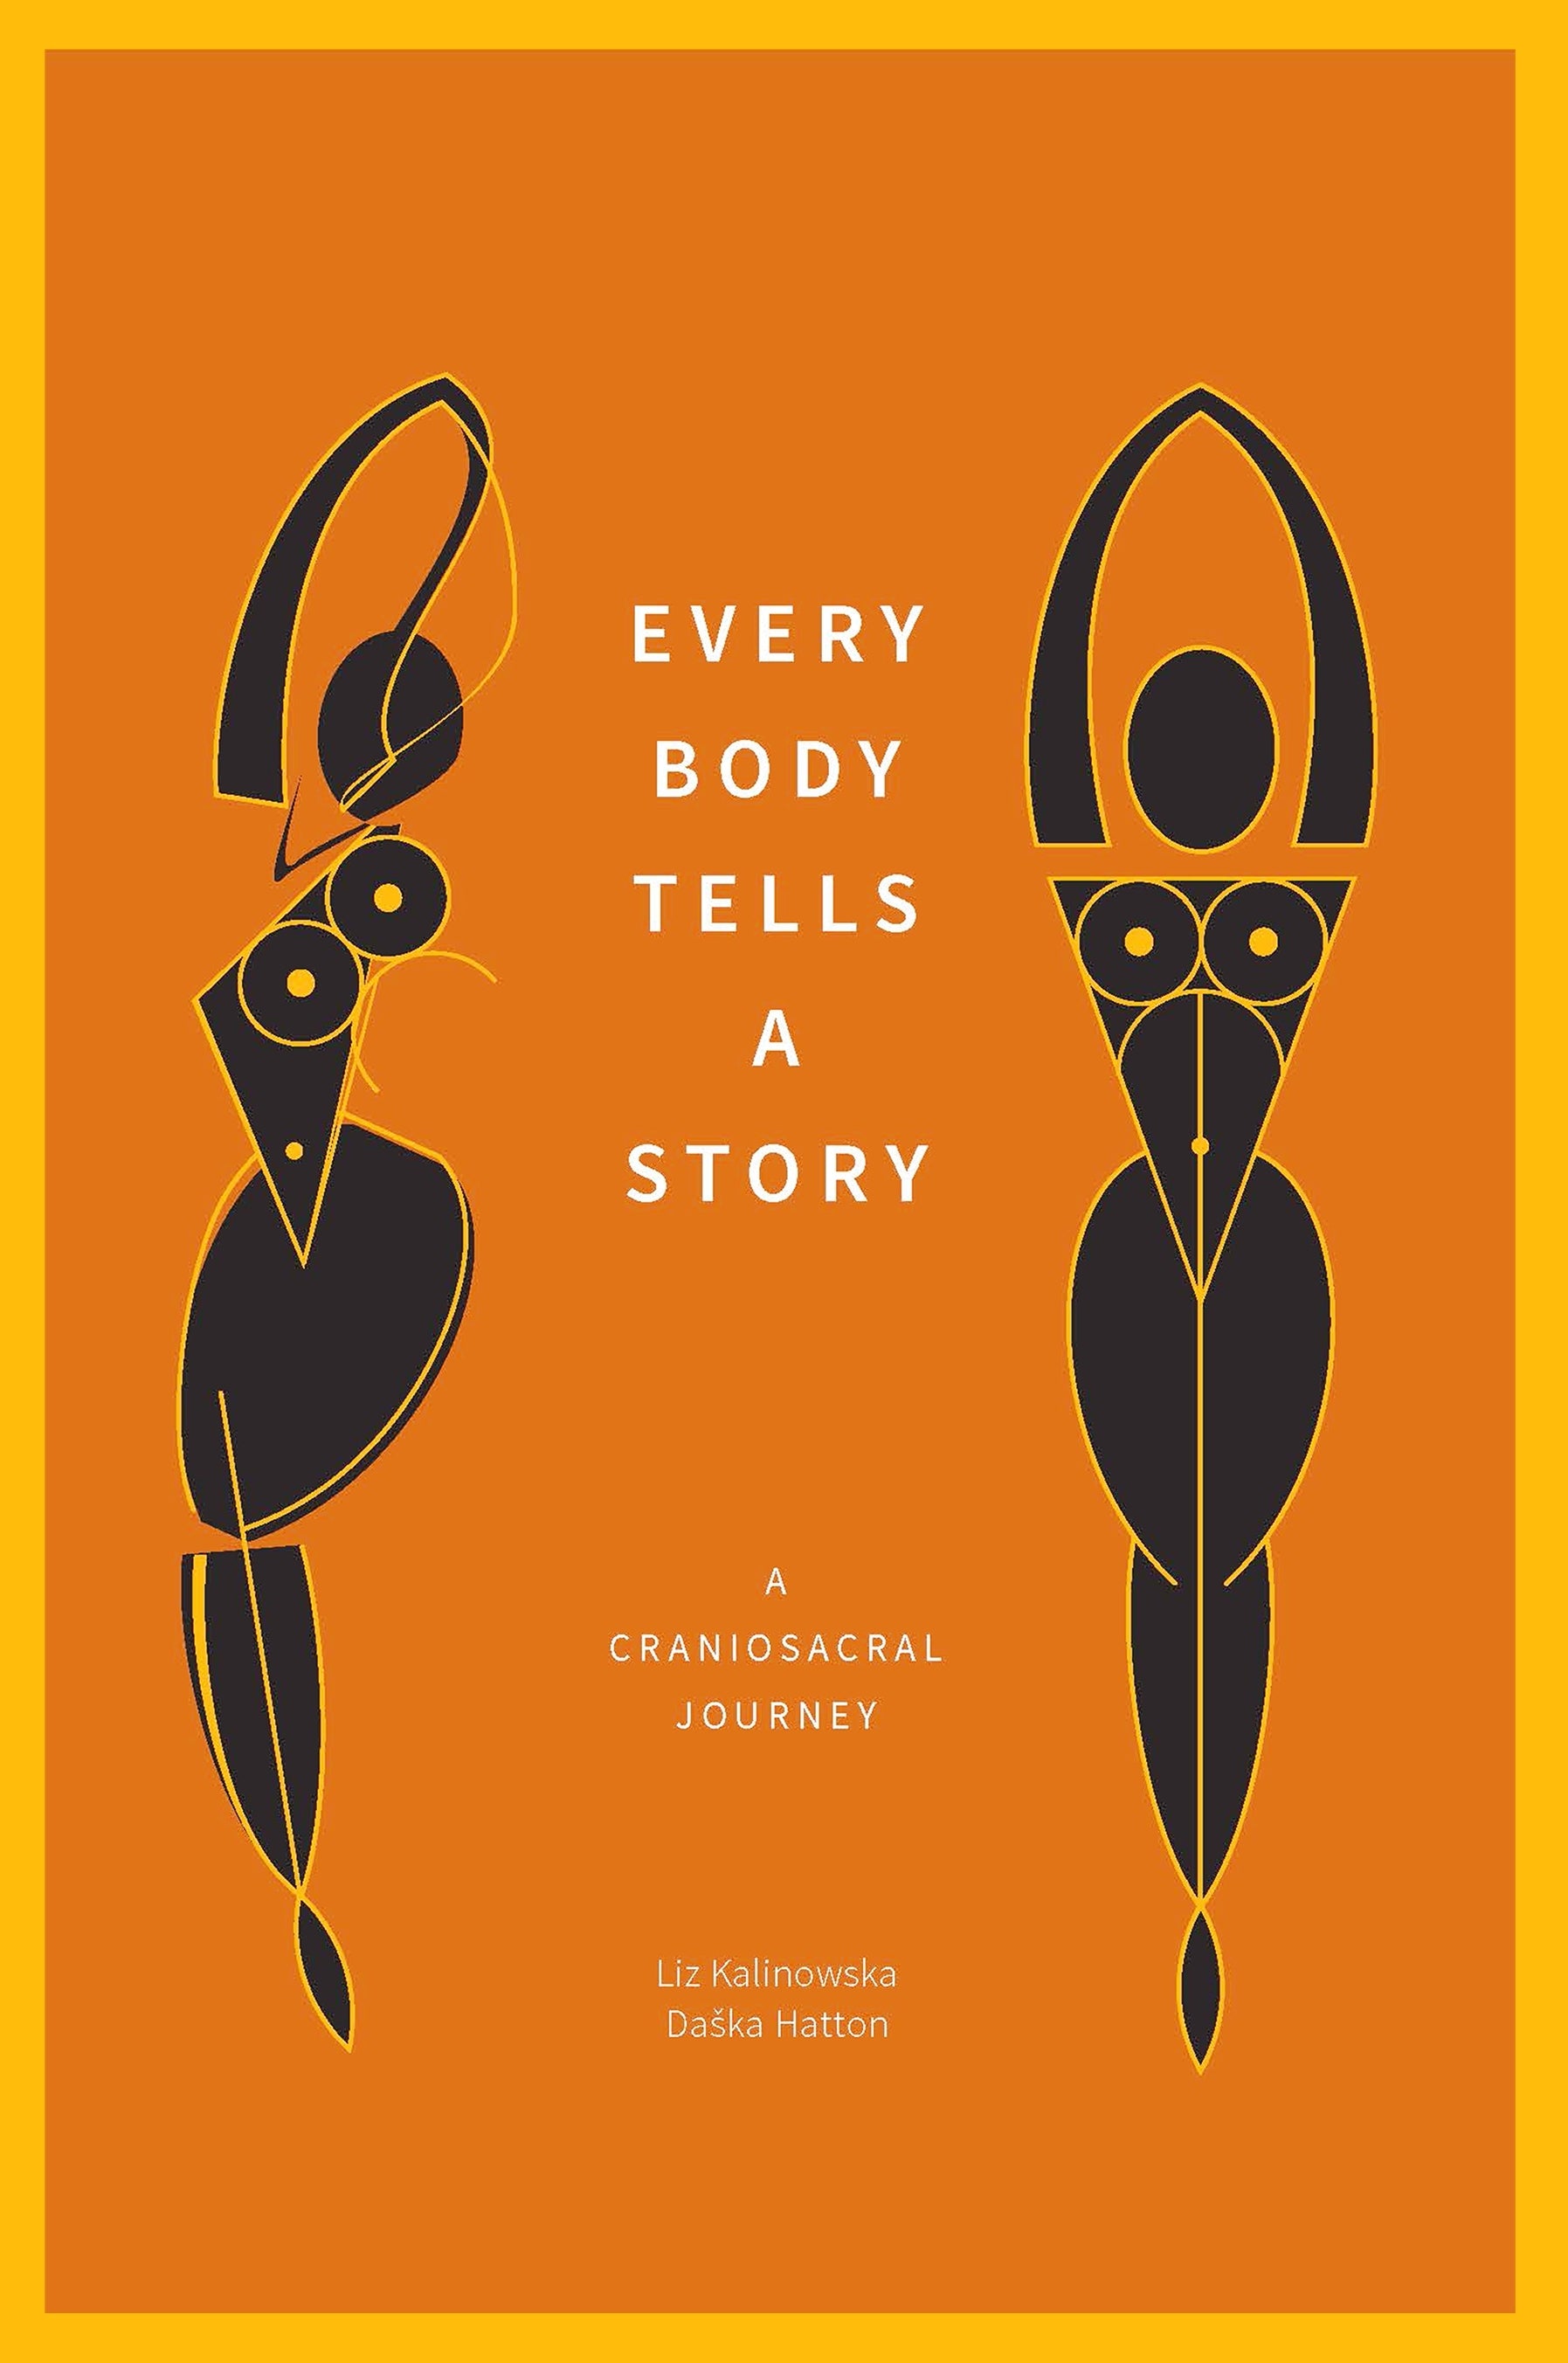 Every Body Tells a Story by Liz Kalinowska, Daška Hatton